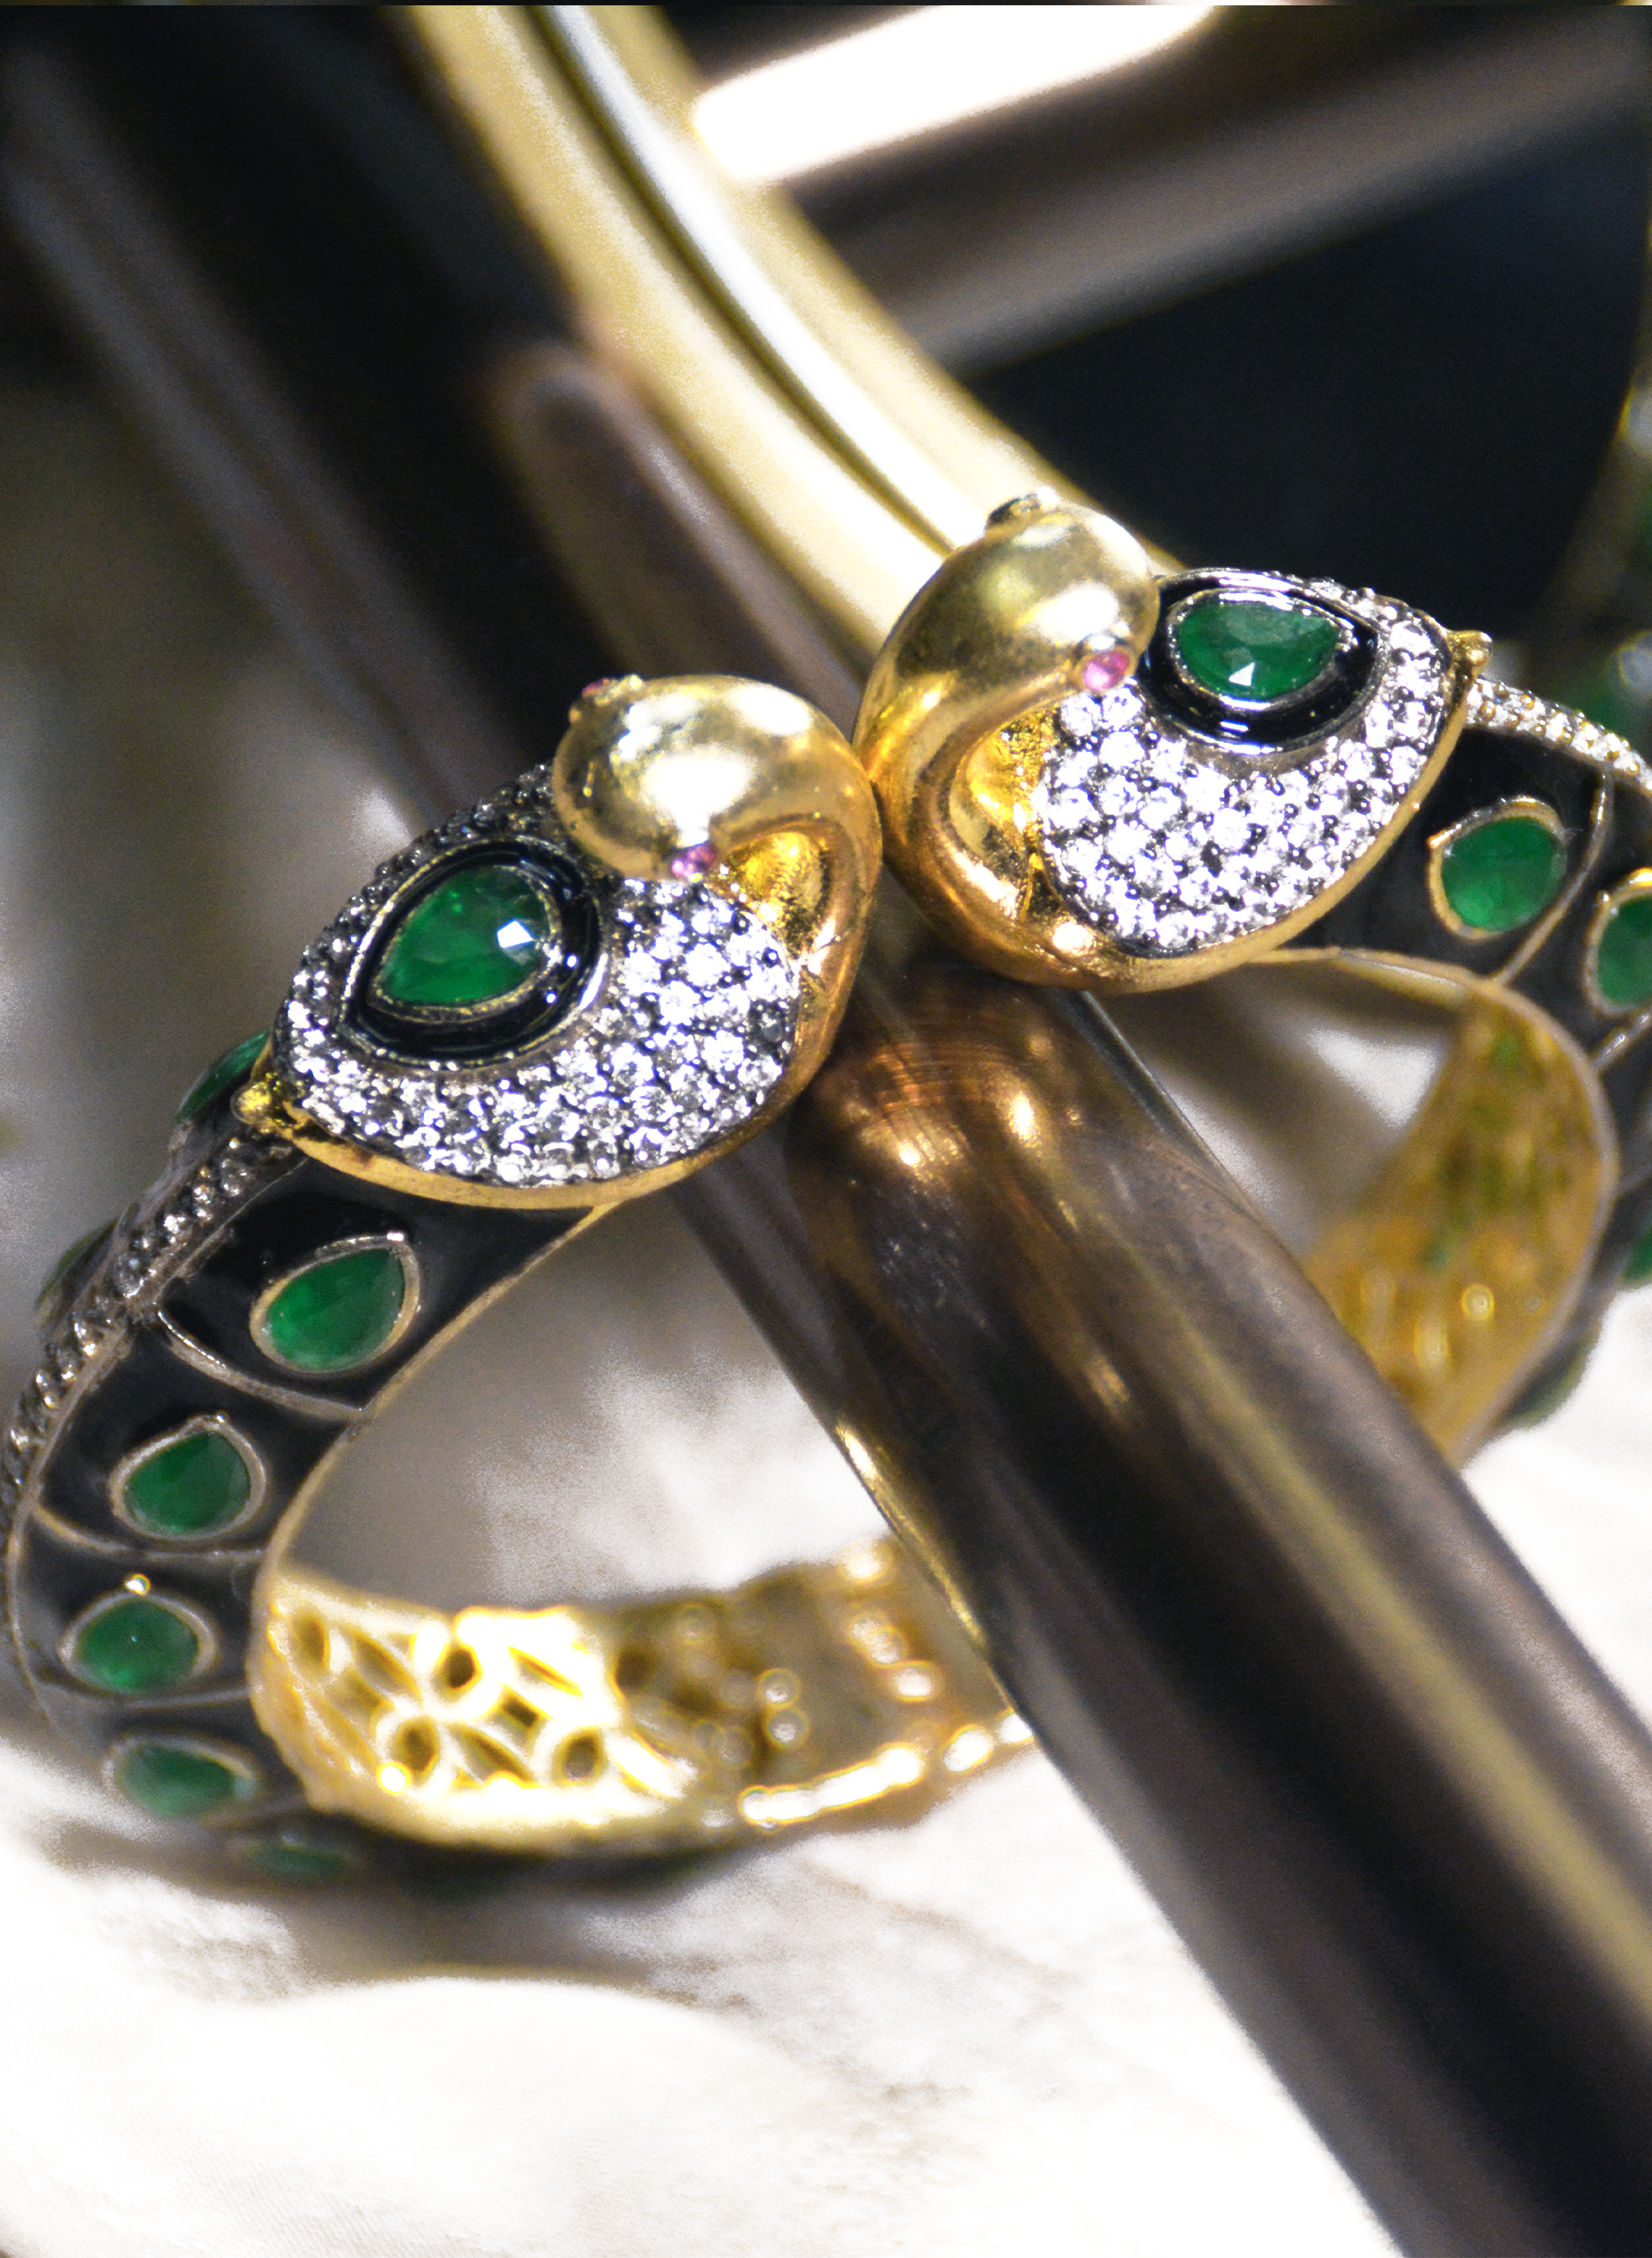 Swan cuff bracelet with emeralds